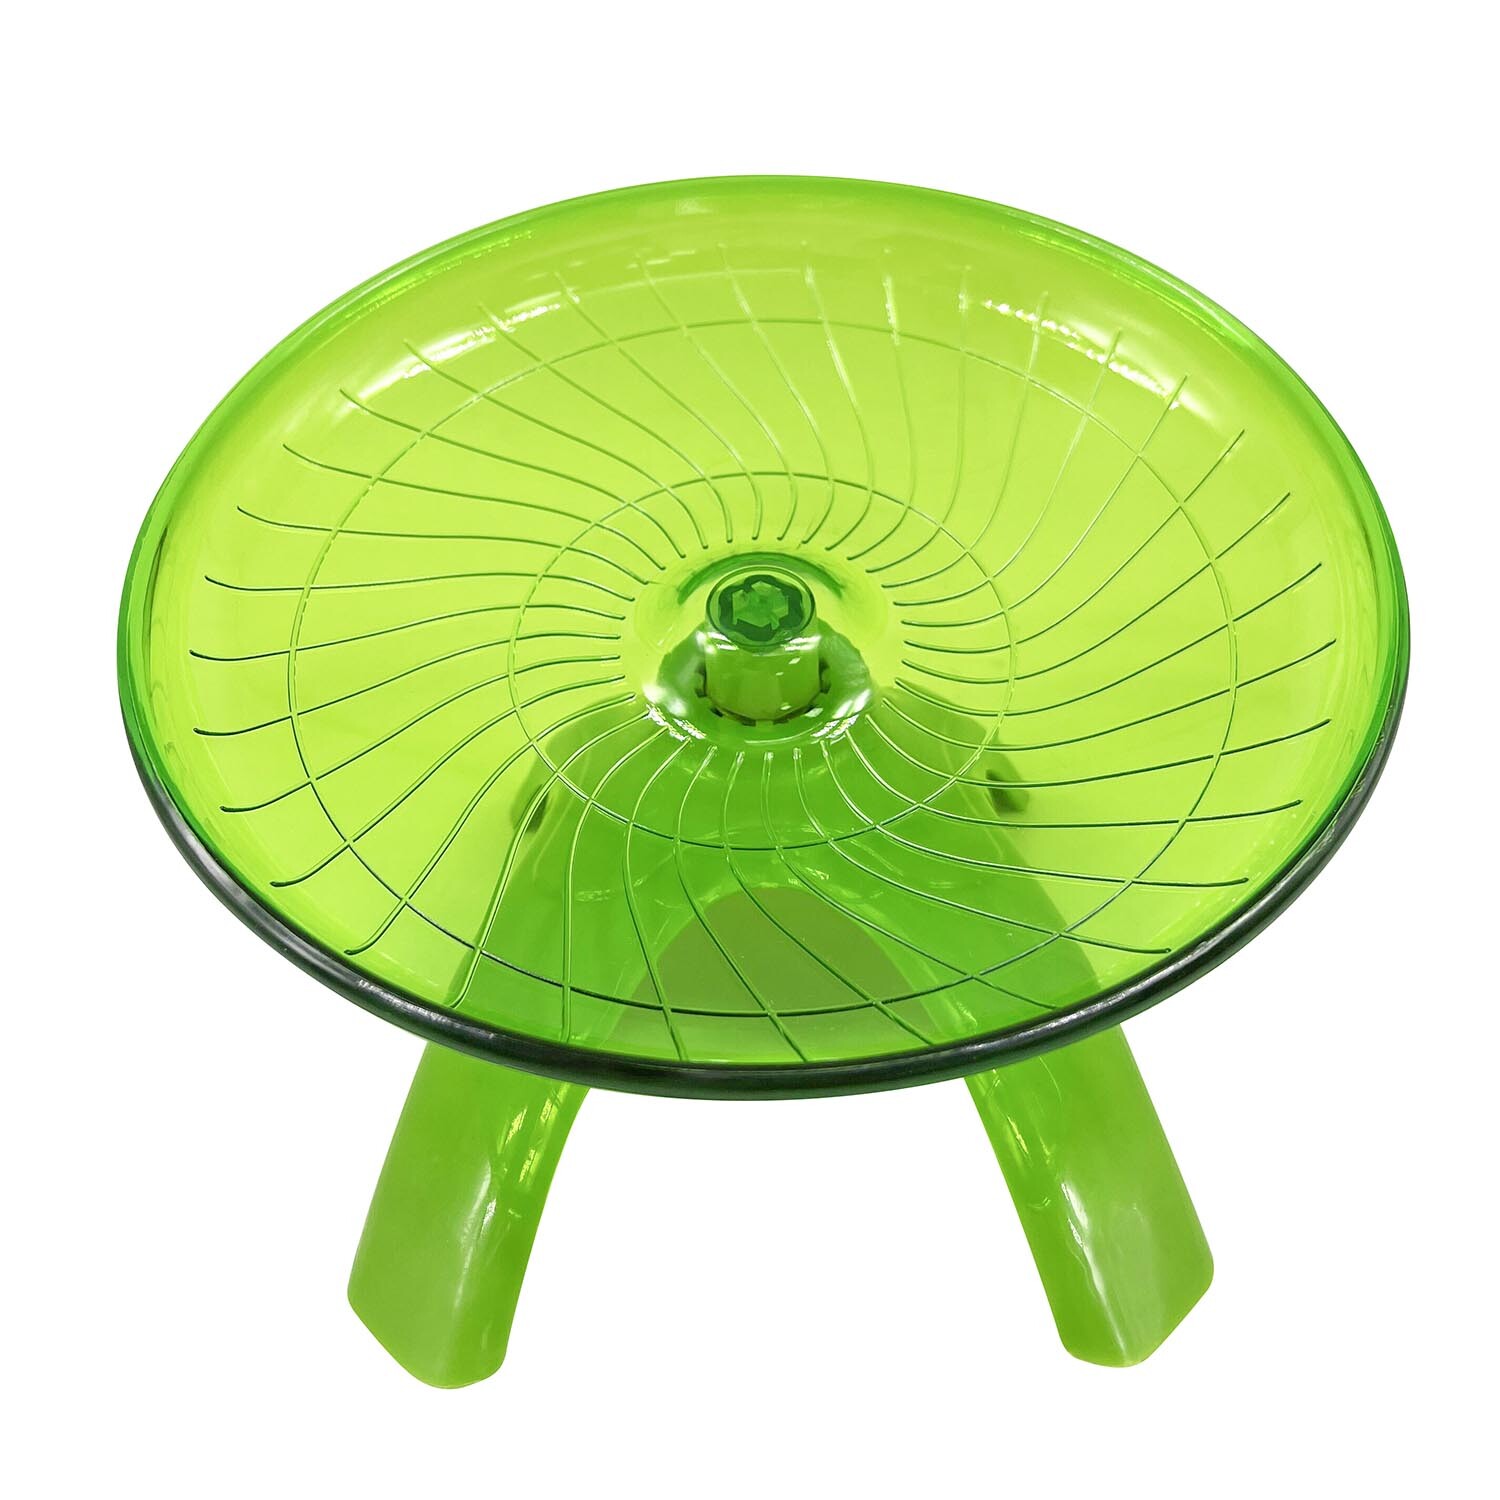 Spinning Exercise Wheel - Green Image 1